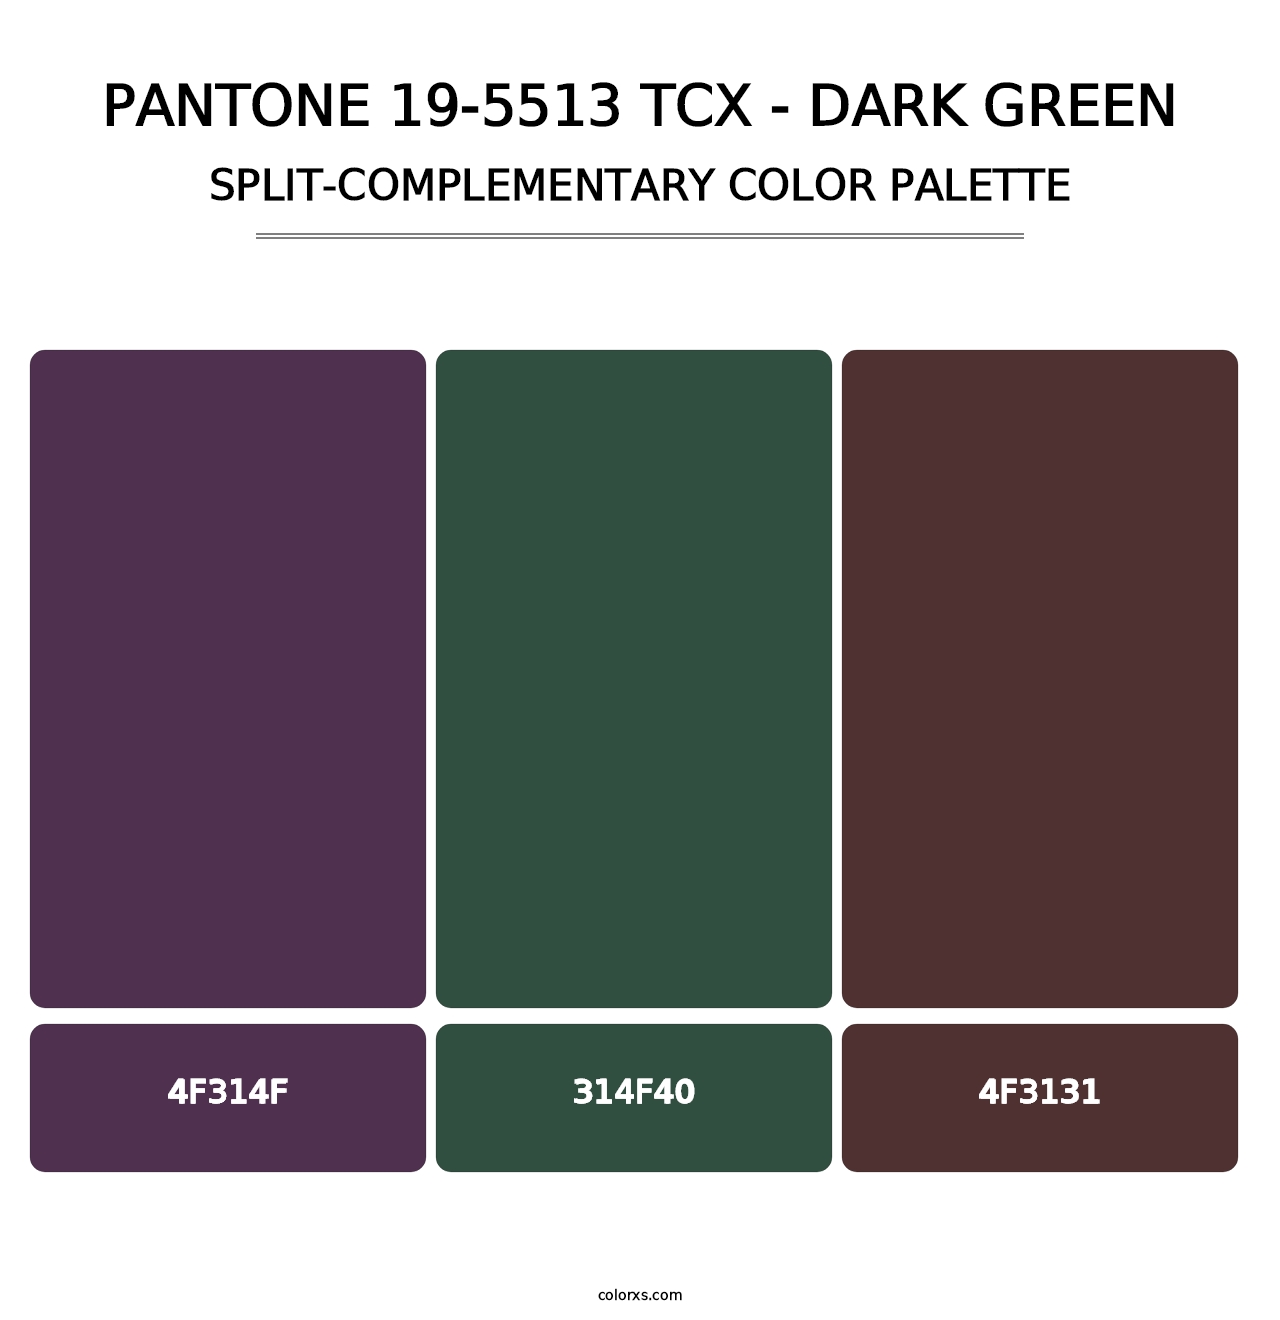 PANTONE 19-5513 TCX - Dark Green - Split-Complementary Color Palette